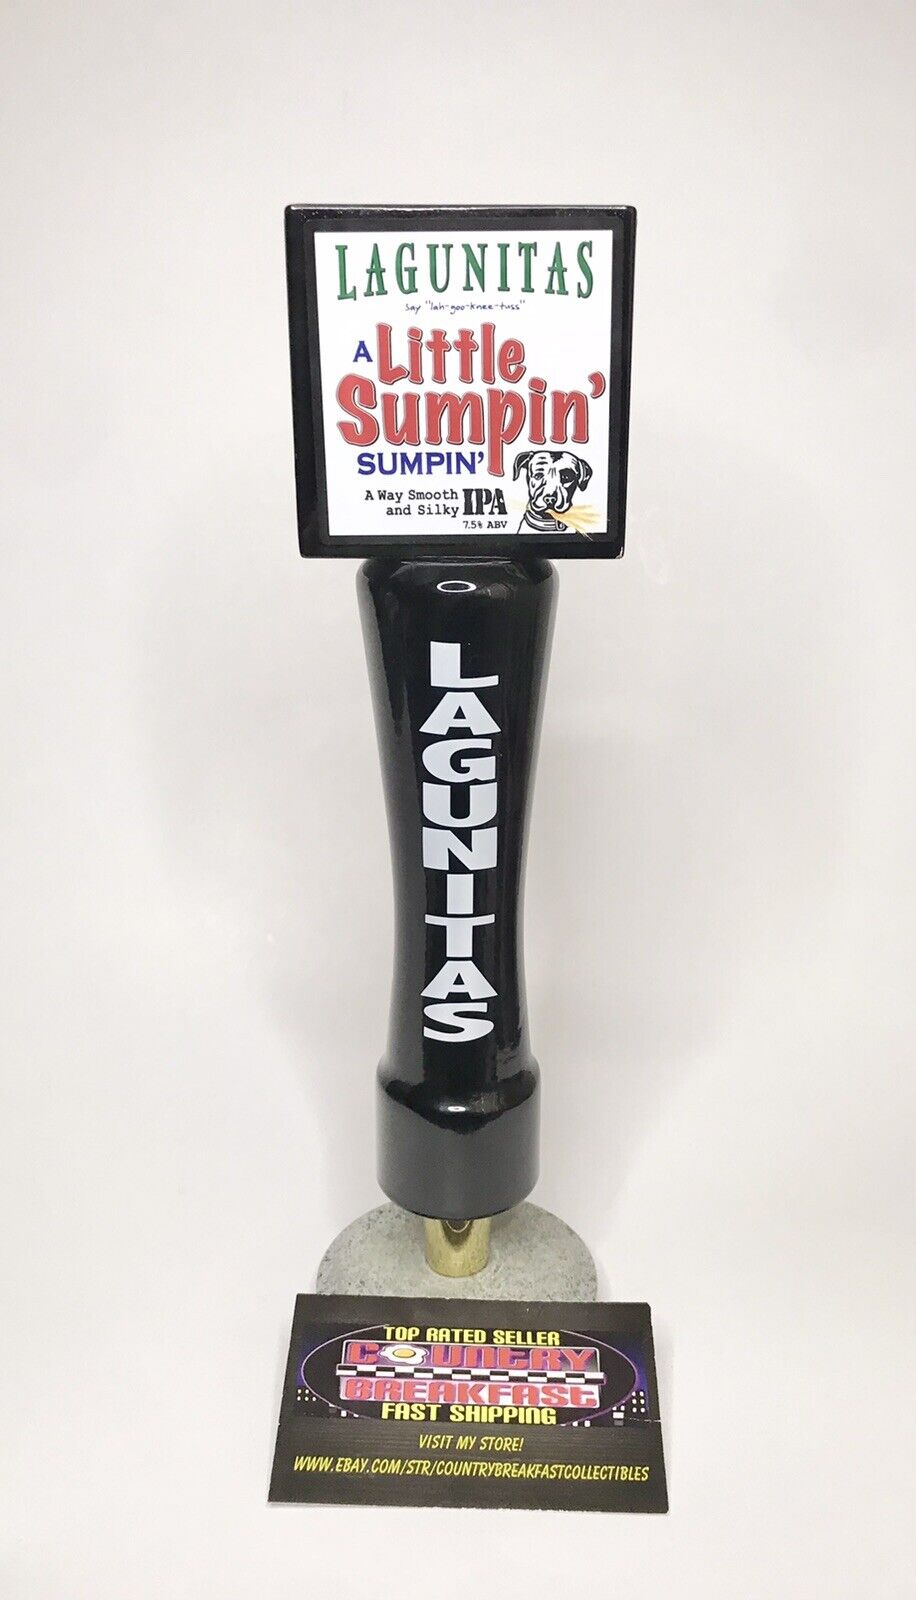 Lagunitas A Little Sumpin’ Sumpin’ IPA Black Logo Beer Tap Handle 10” Tall - New